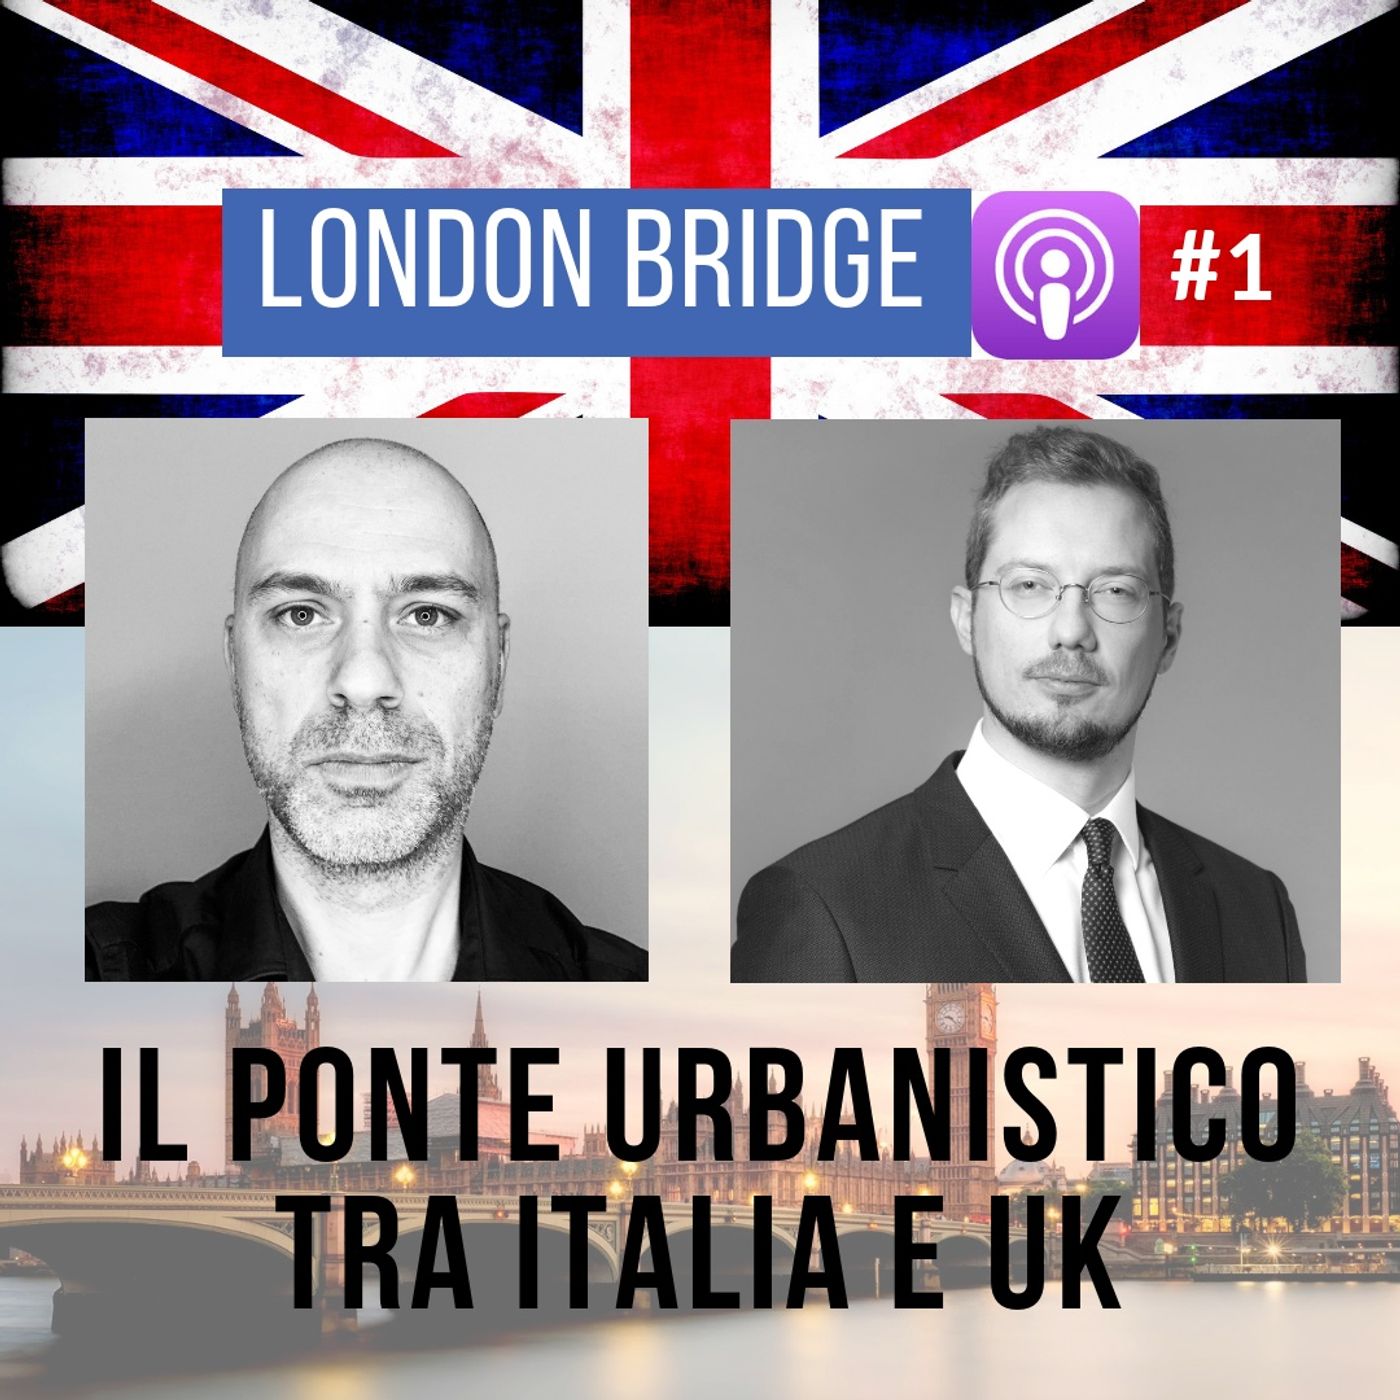 London Bridge - Urban planning